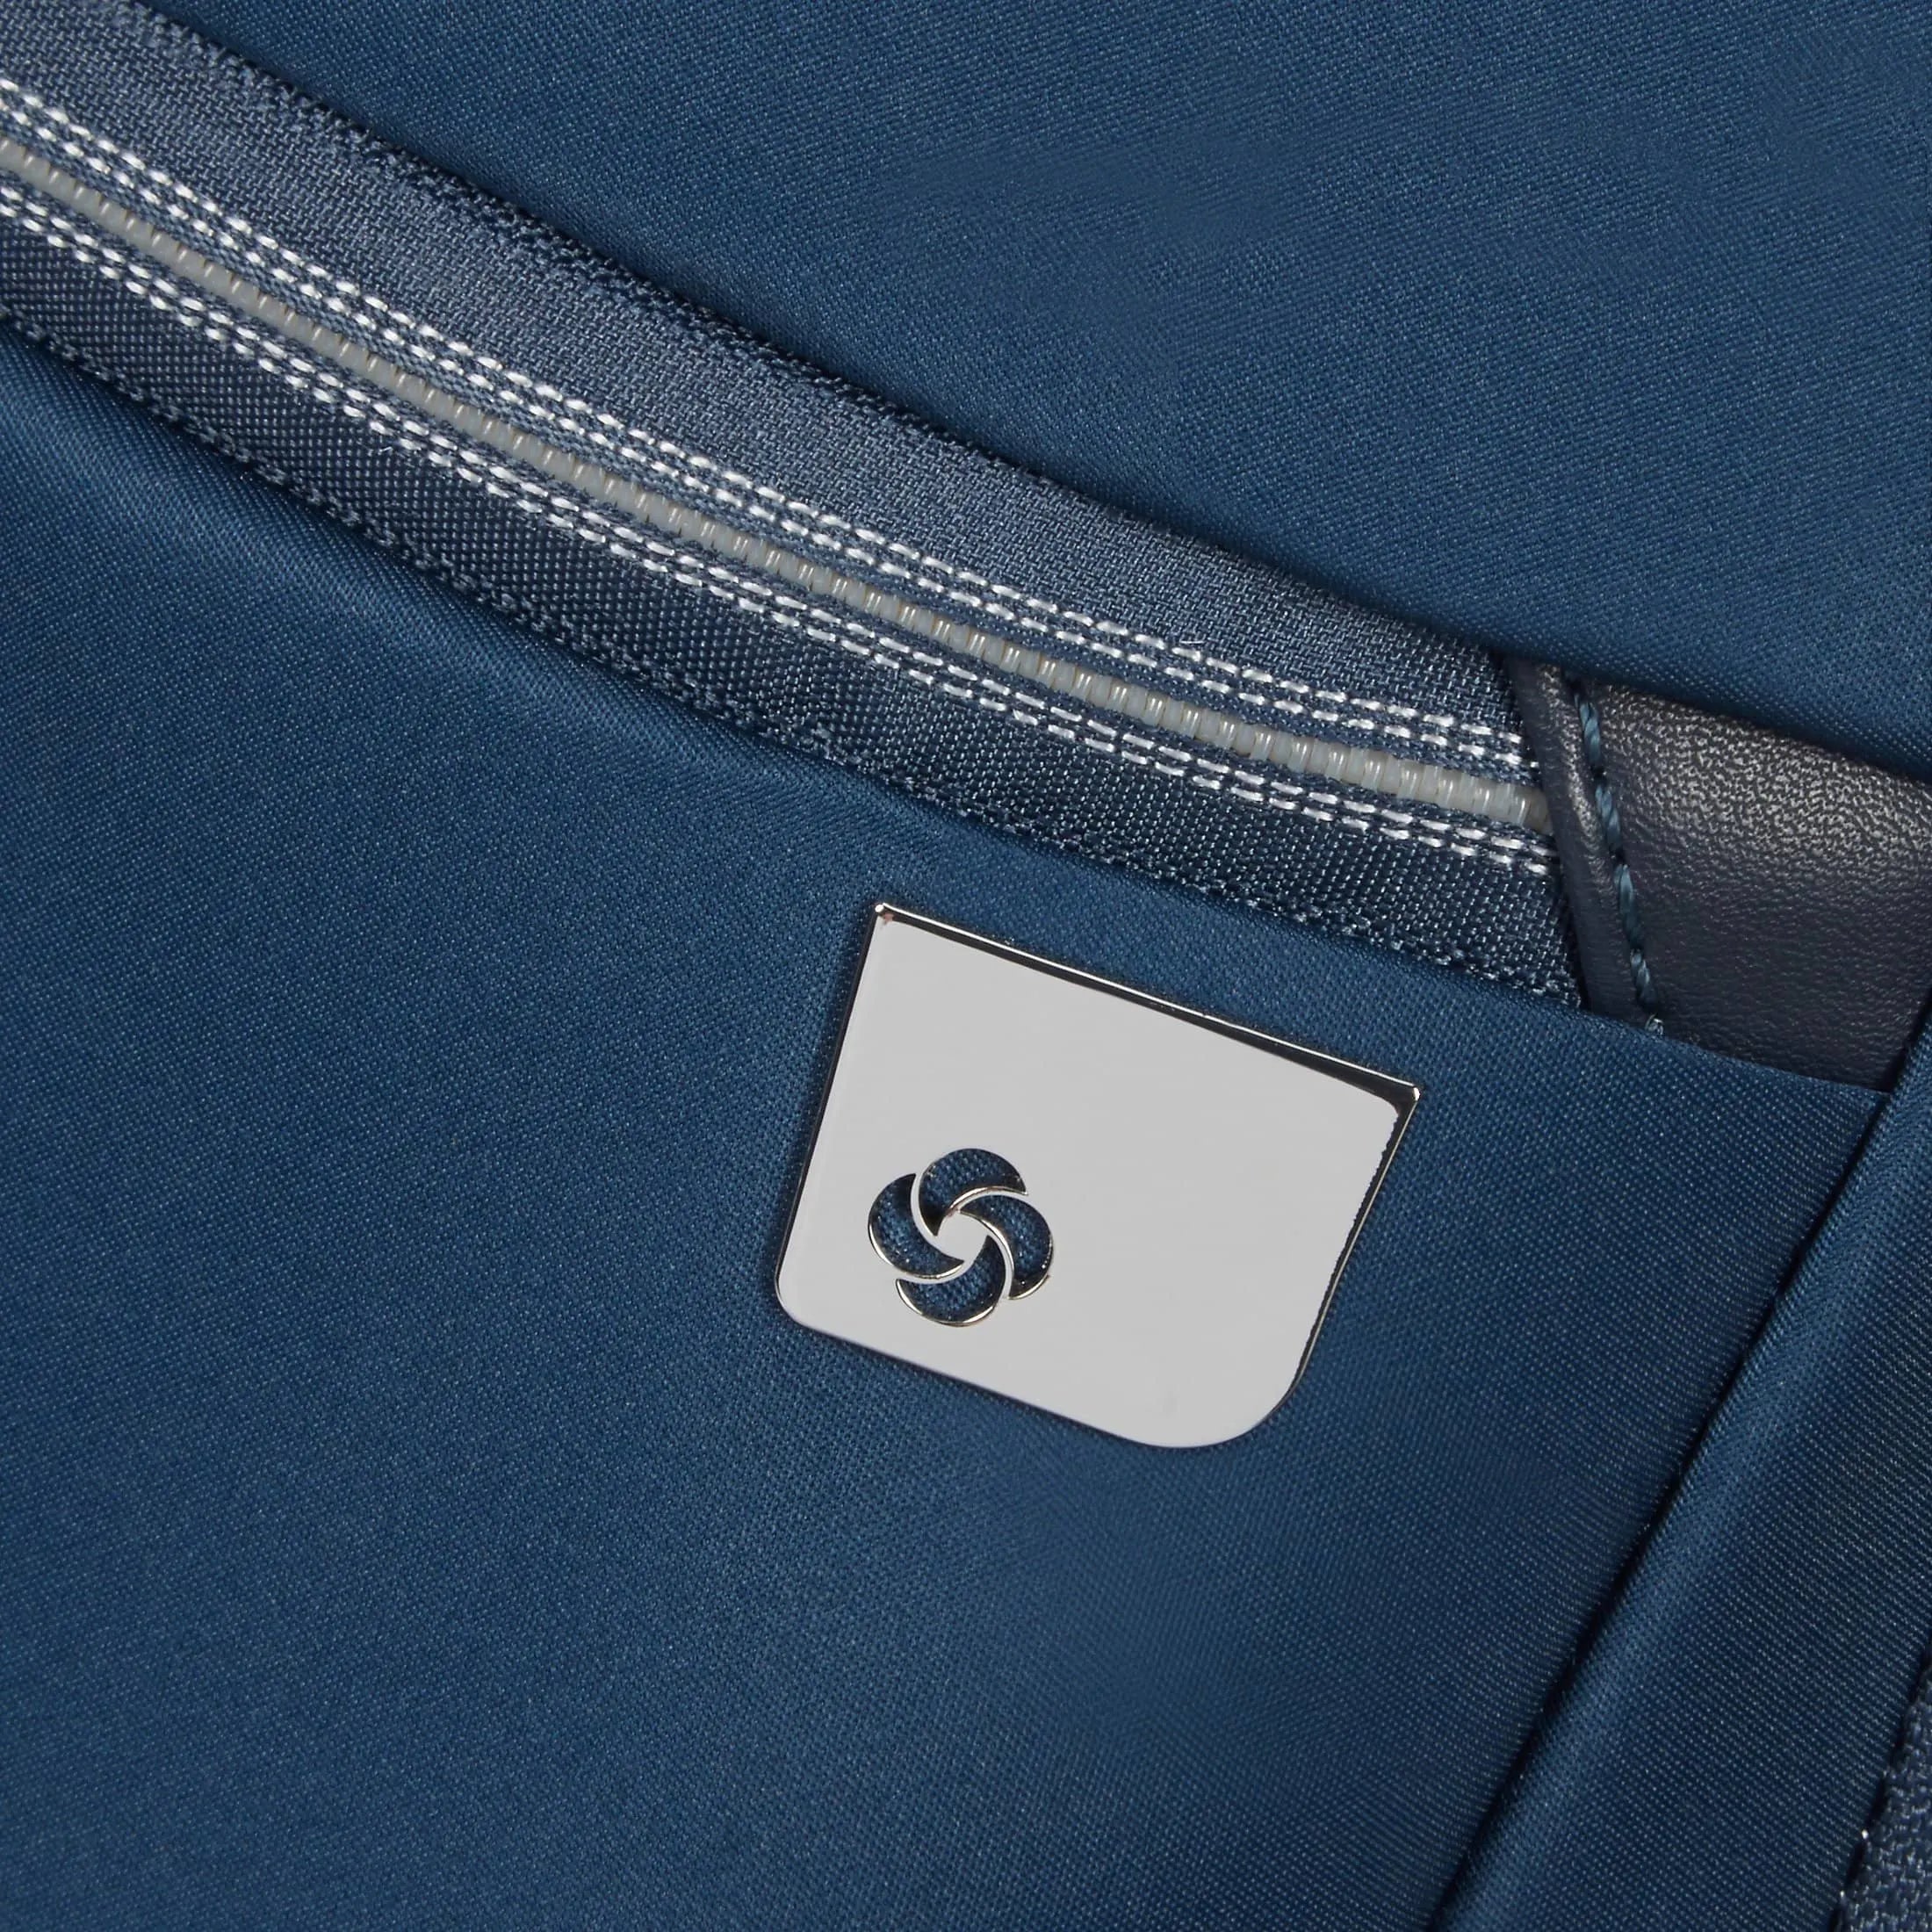 Samsonite Eco Wave Backpack 40 cm - midnight blue